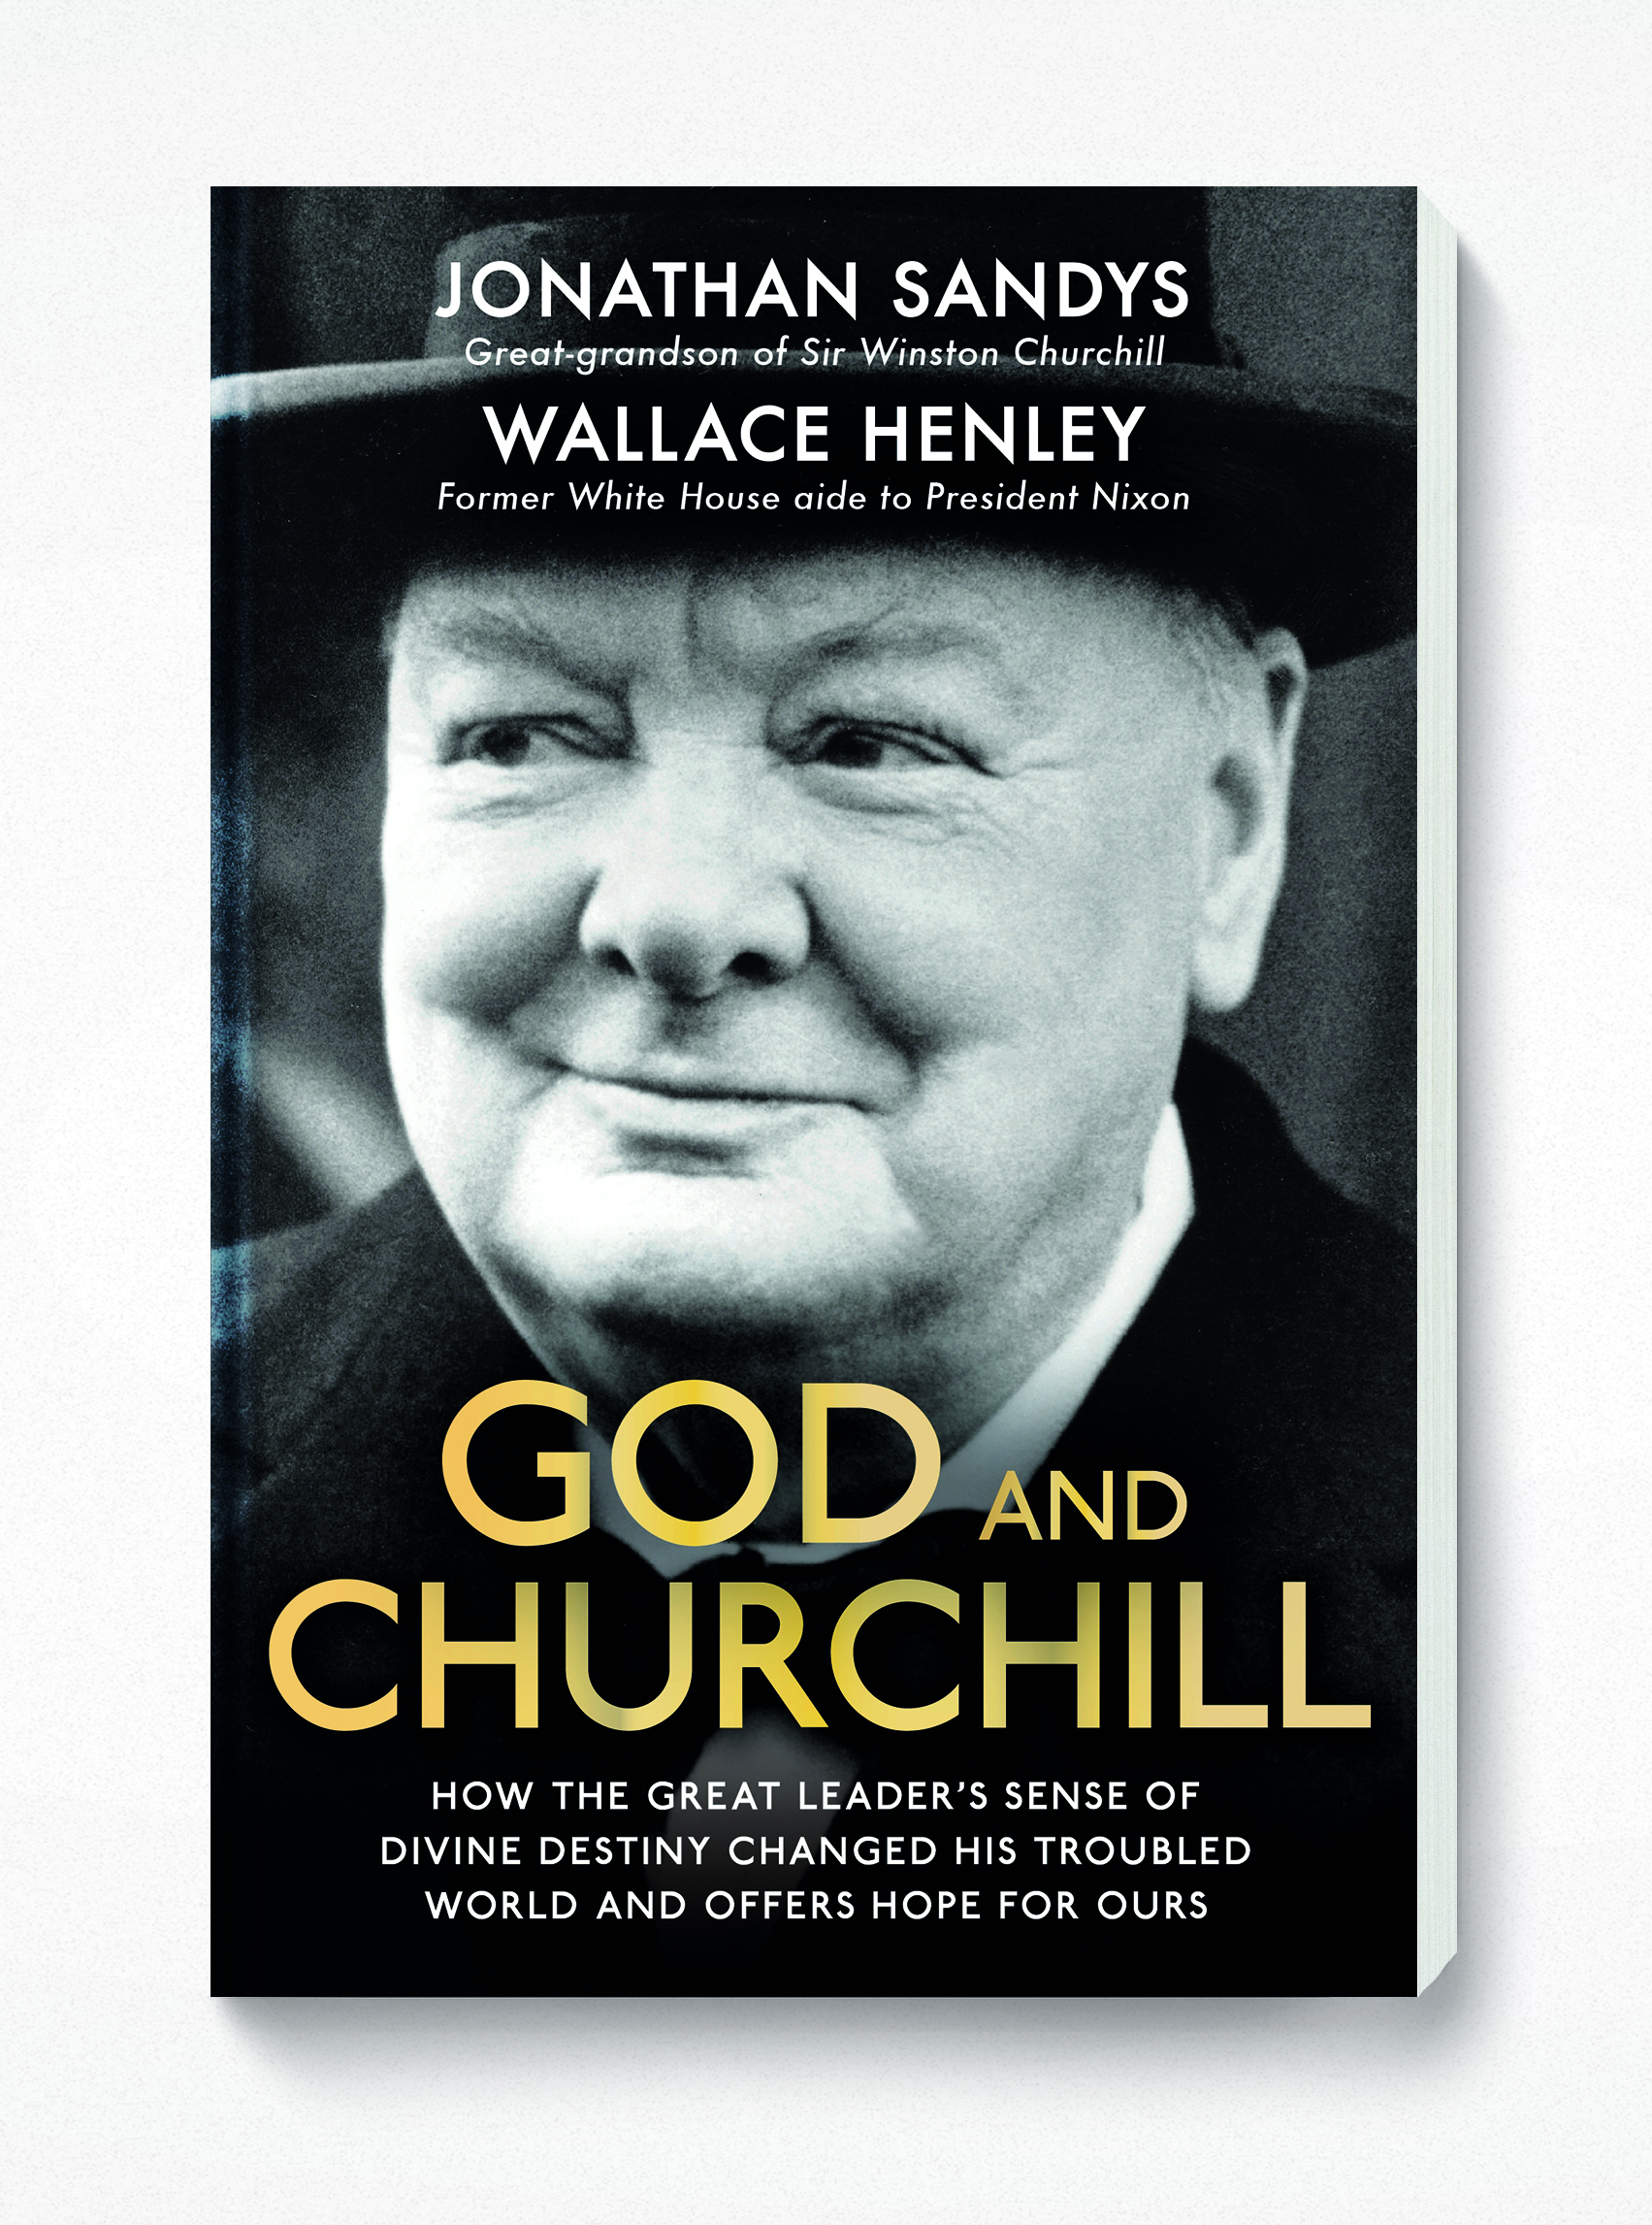 Jonathan Sandys: The Man Who Could Call Churchill ‘Great-Grandpapa’